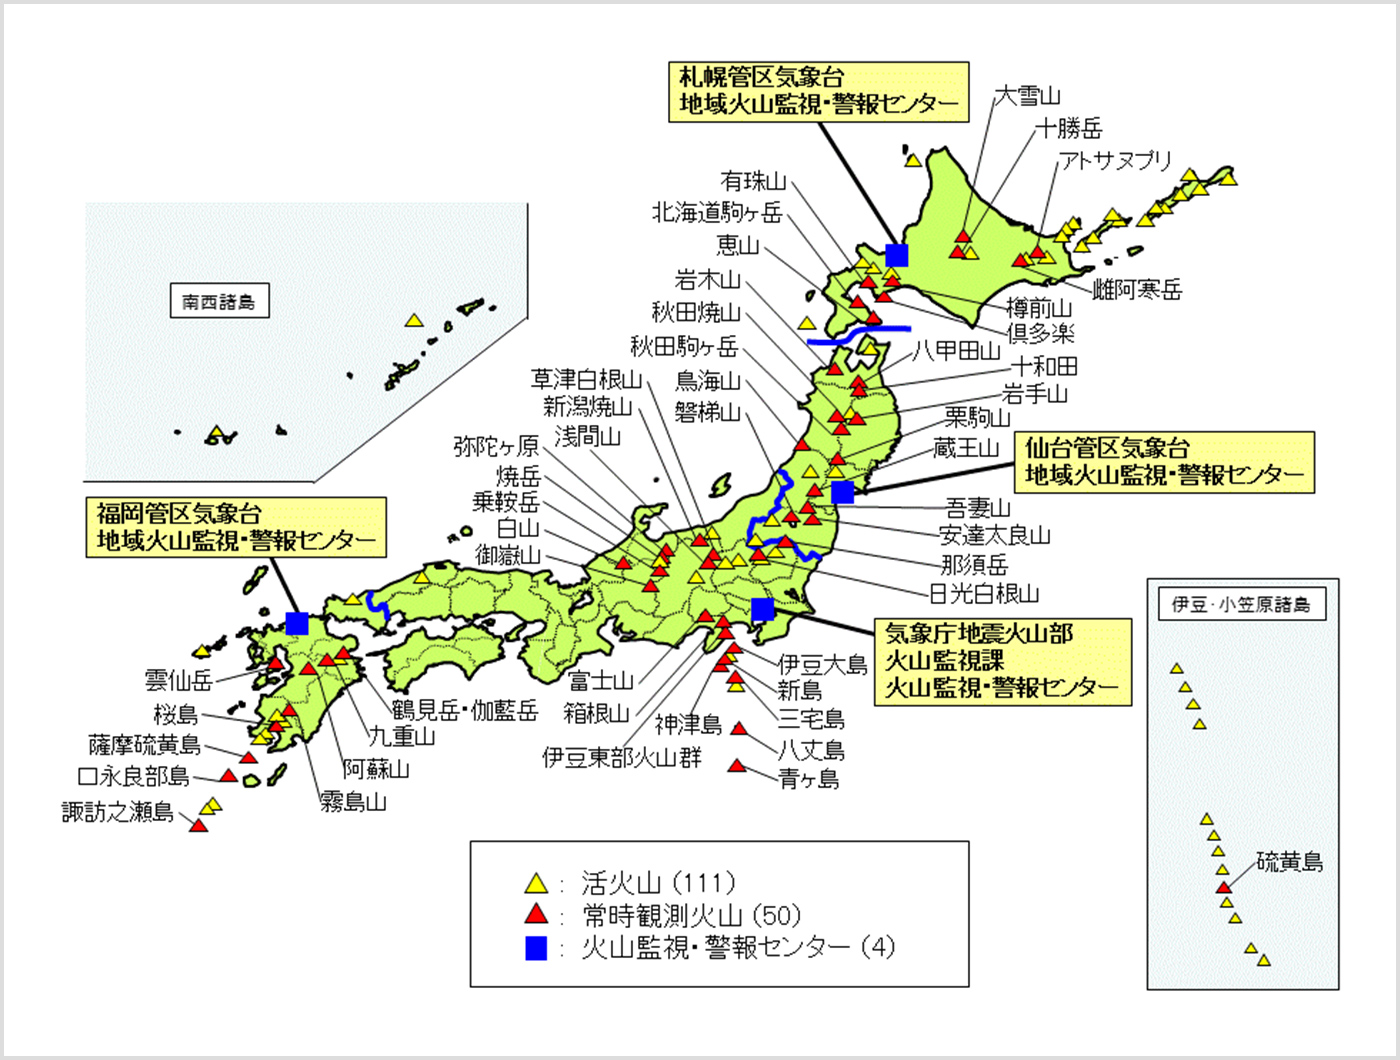 地図: 各火山111件、常時監視火山50件、火山監視・警報センター4件の分布